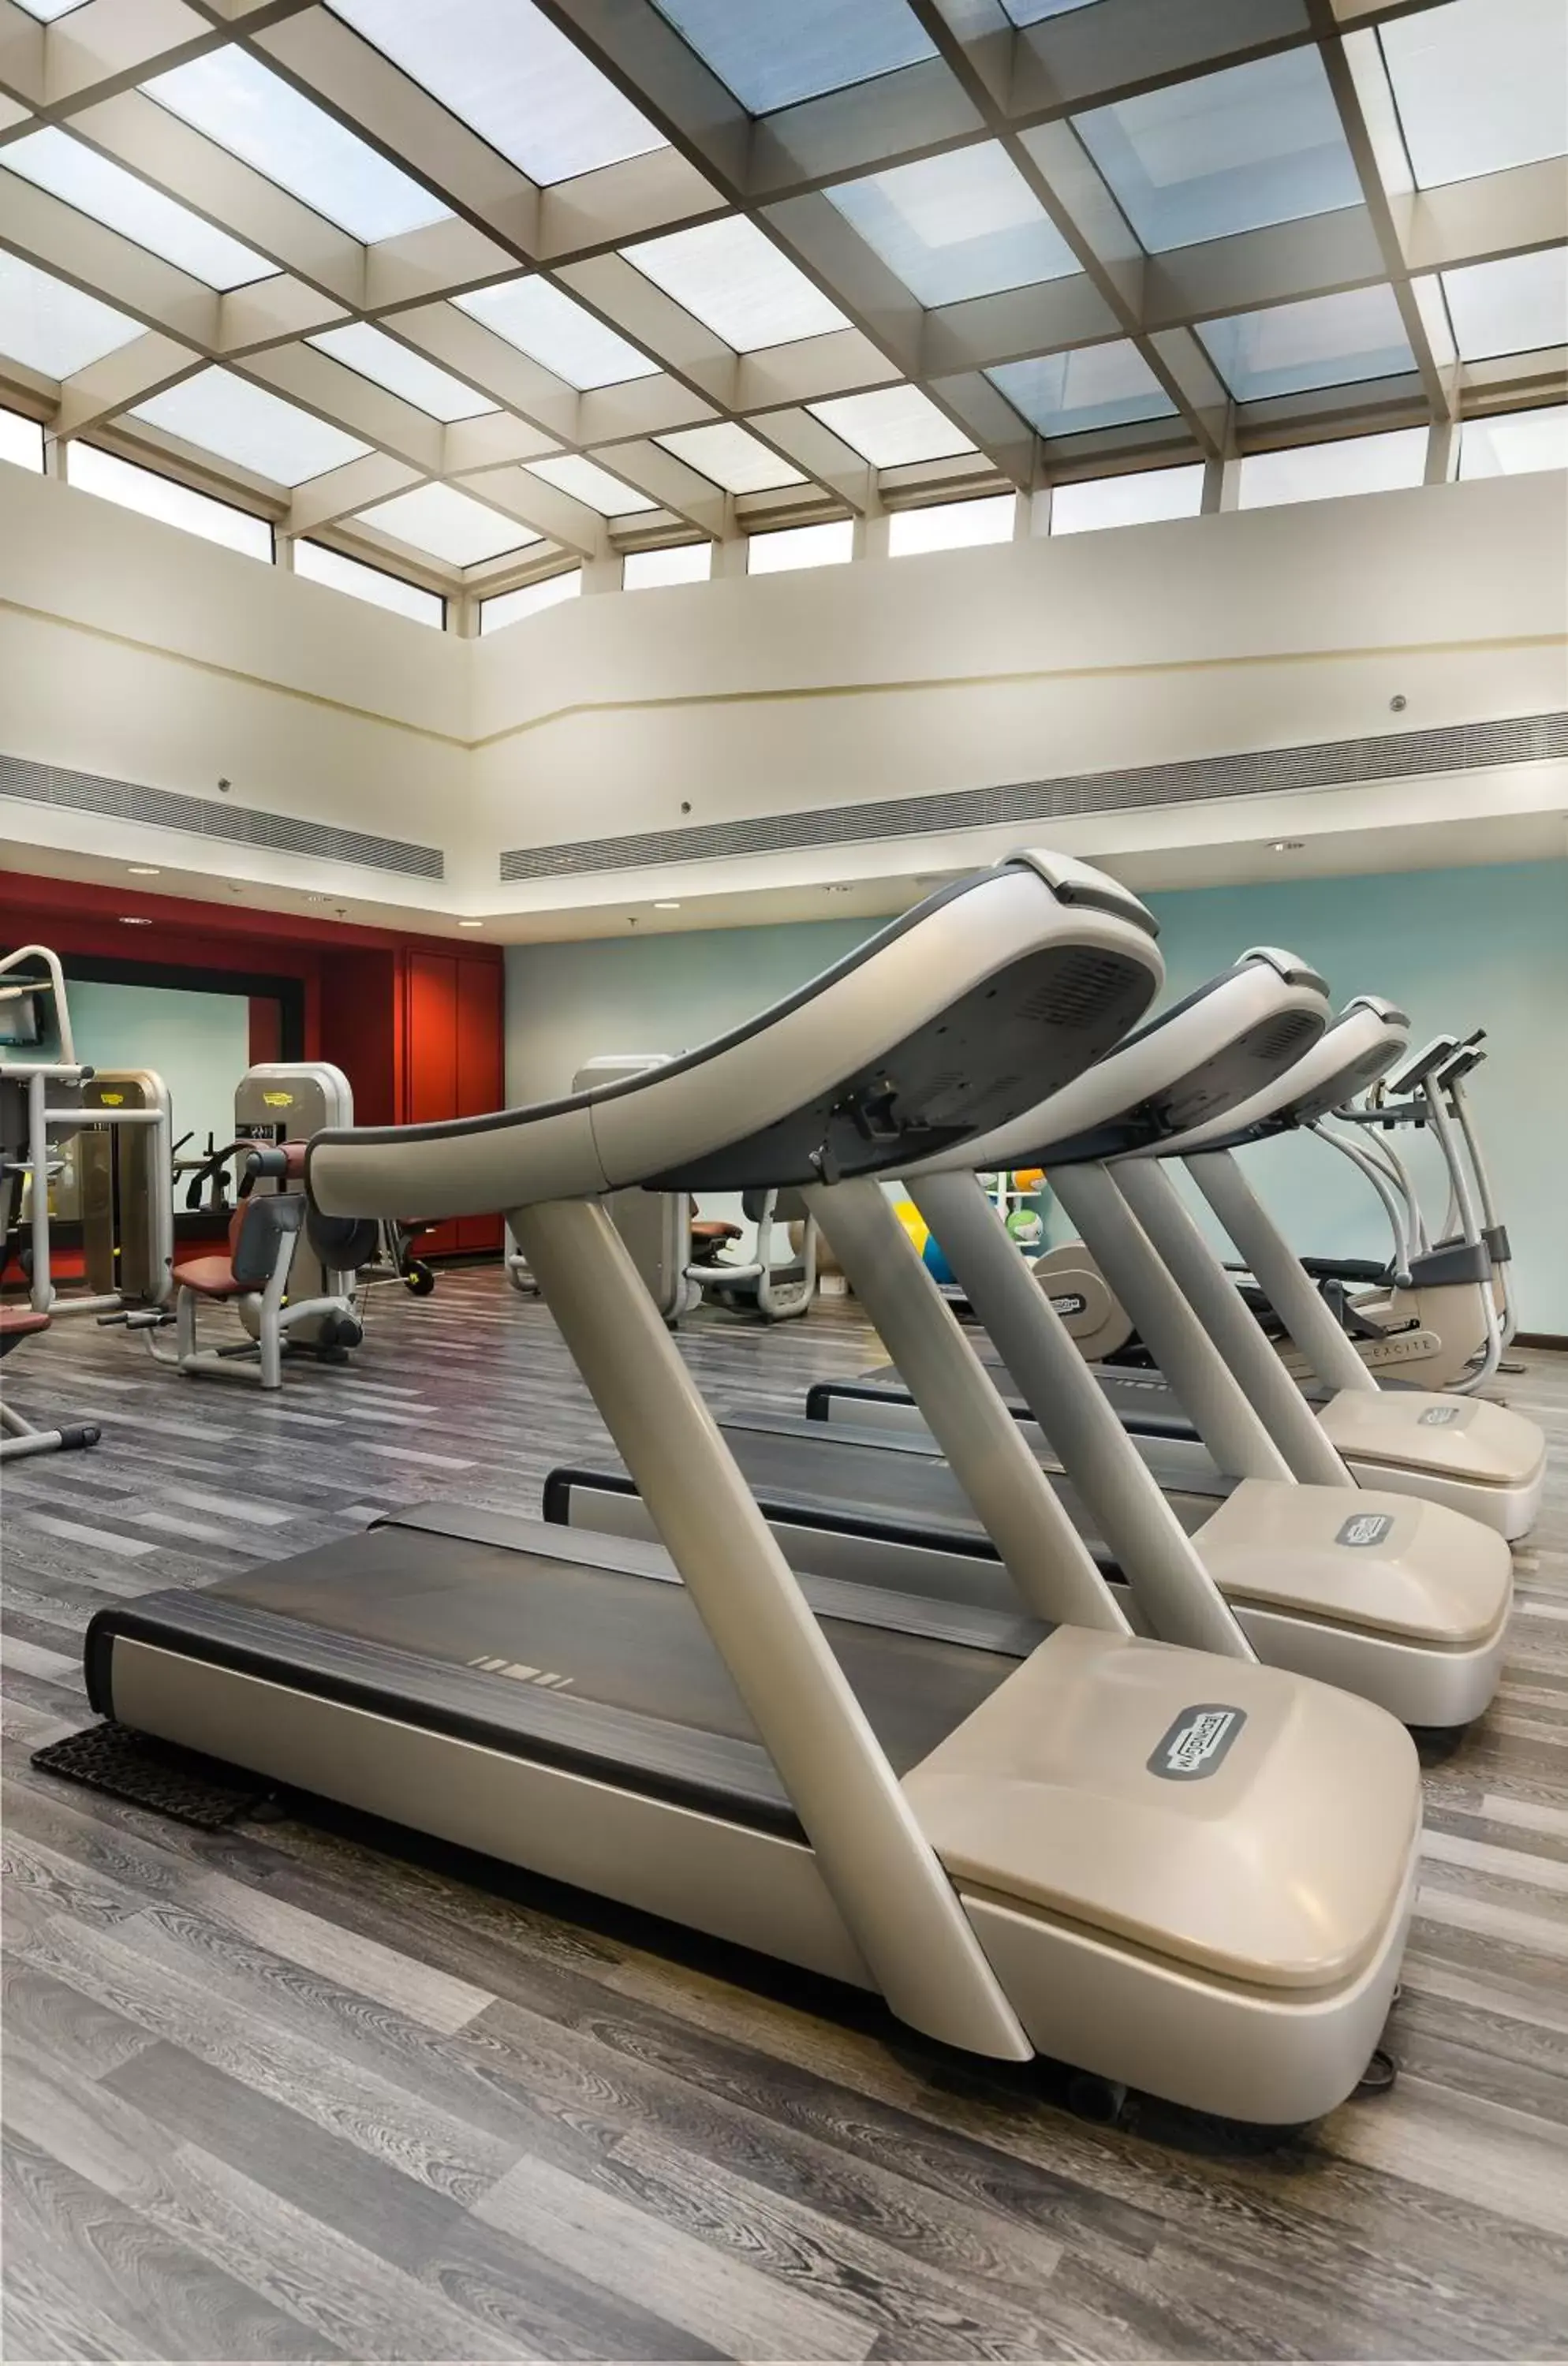 Fitness centre/facilities, Fitness Center/Facilities in Hilton Alexandria Green Plaza